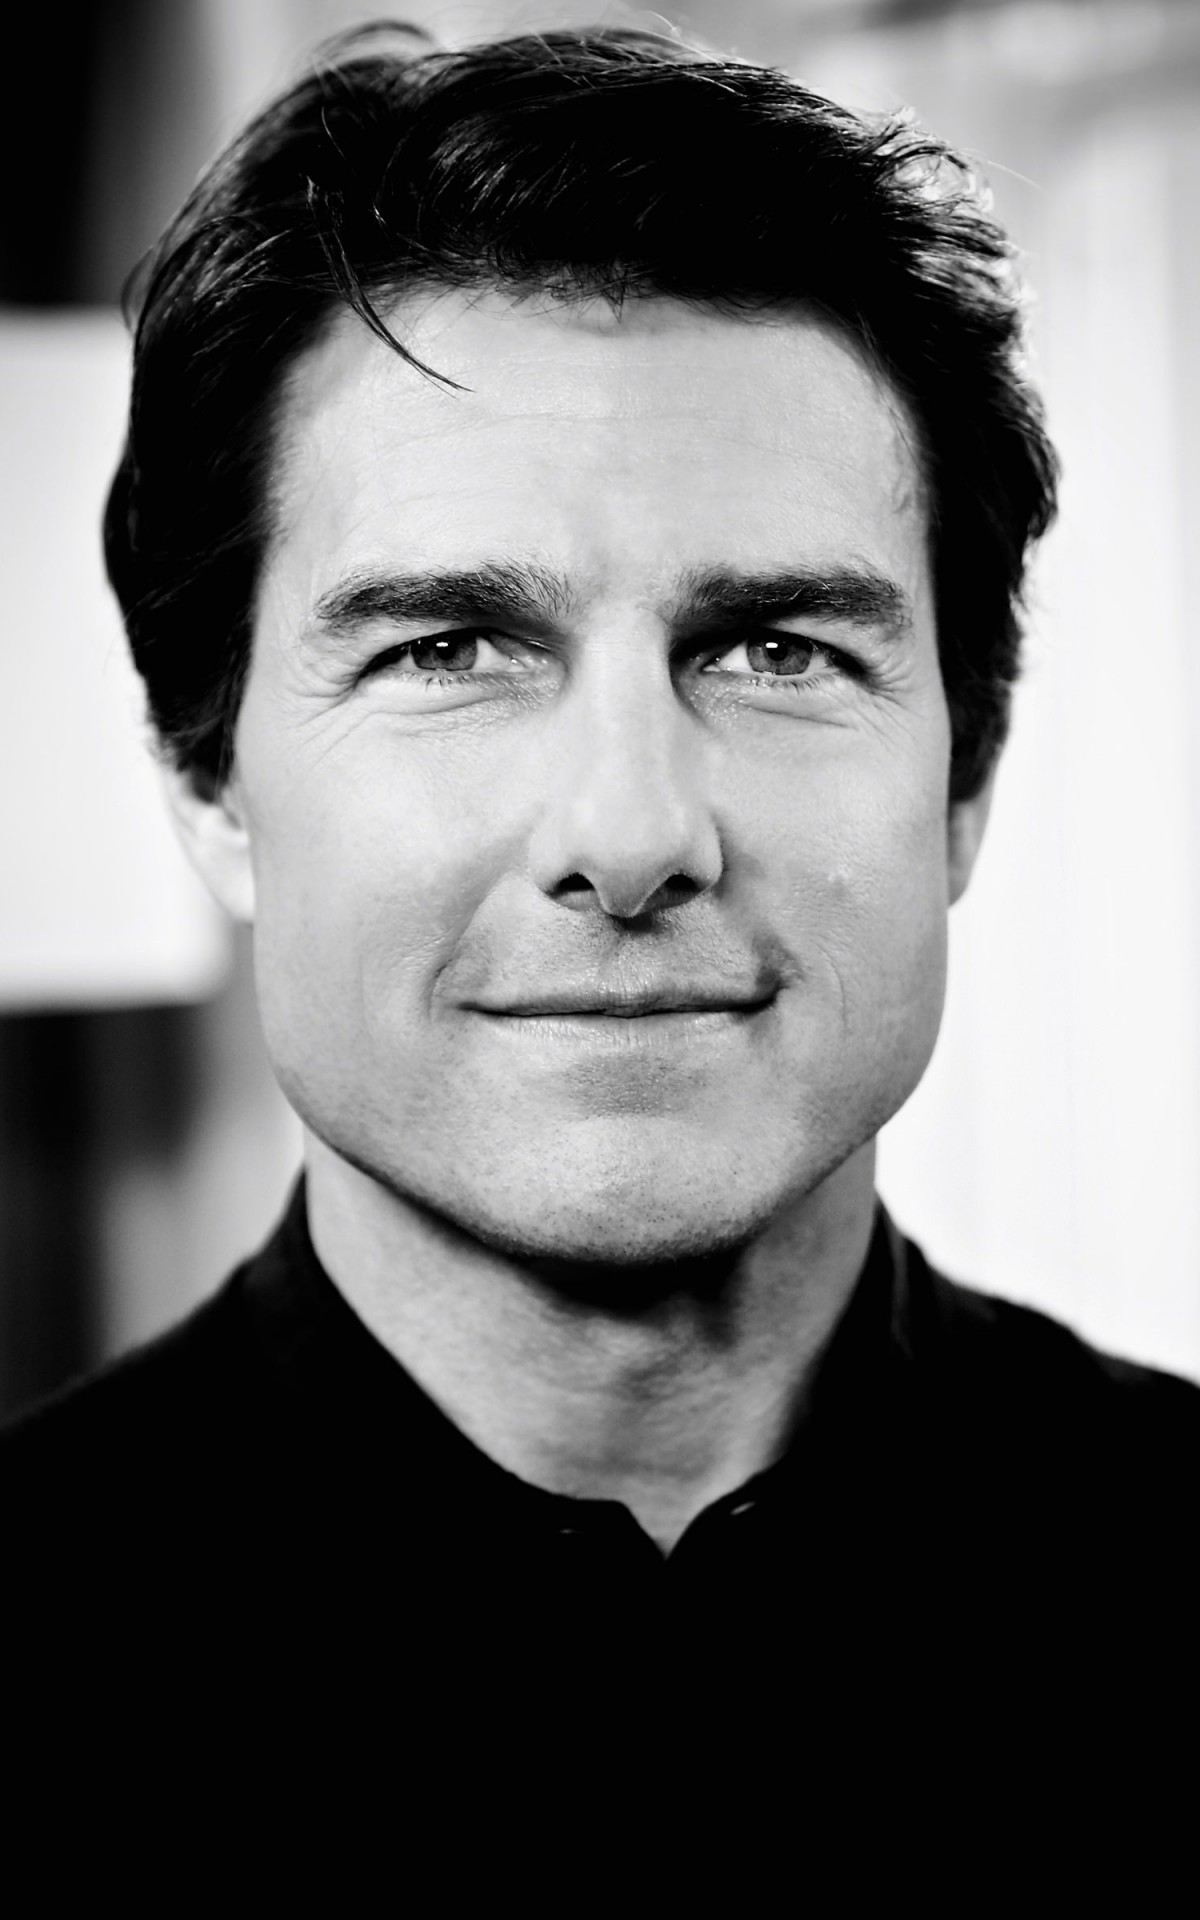 Tom Cruise Black & White Portrait Wallpaper for Amazon Kindle Fire HDX